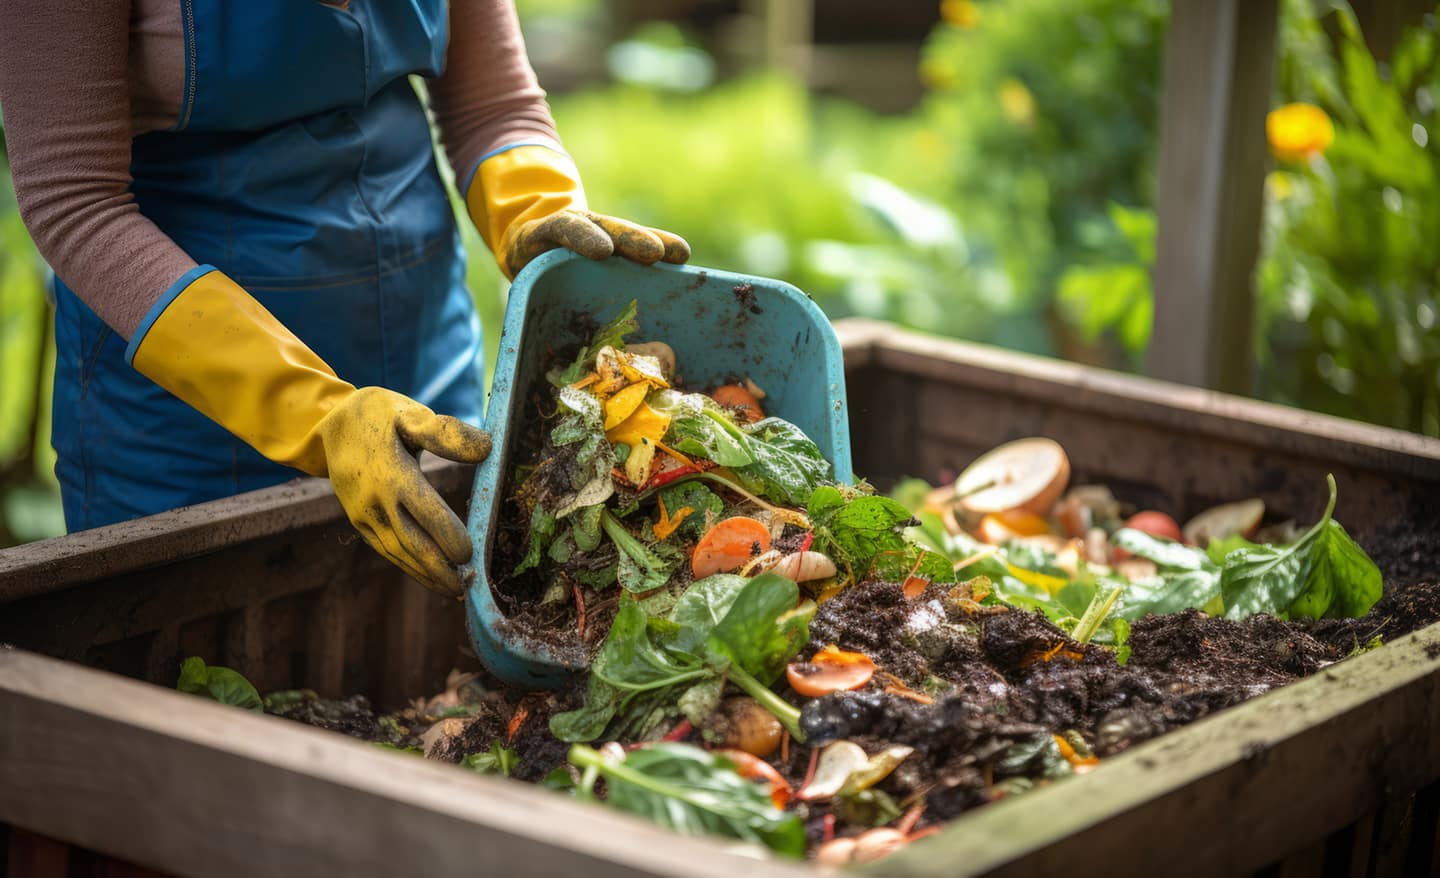 Gardener putting kitchen scraps in a compost pile